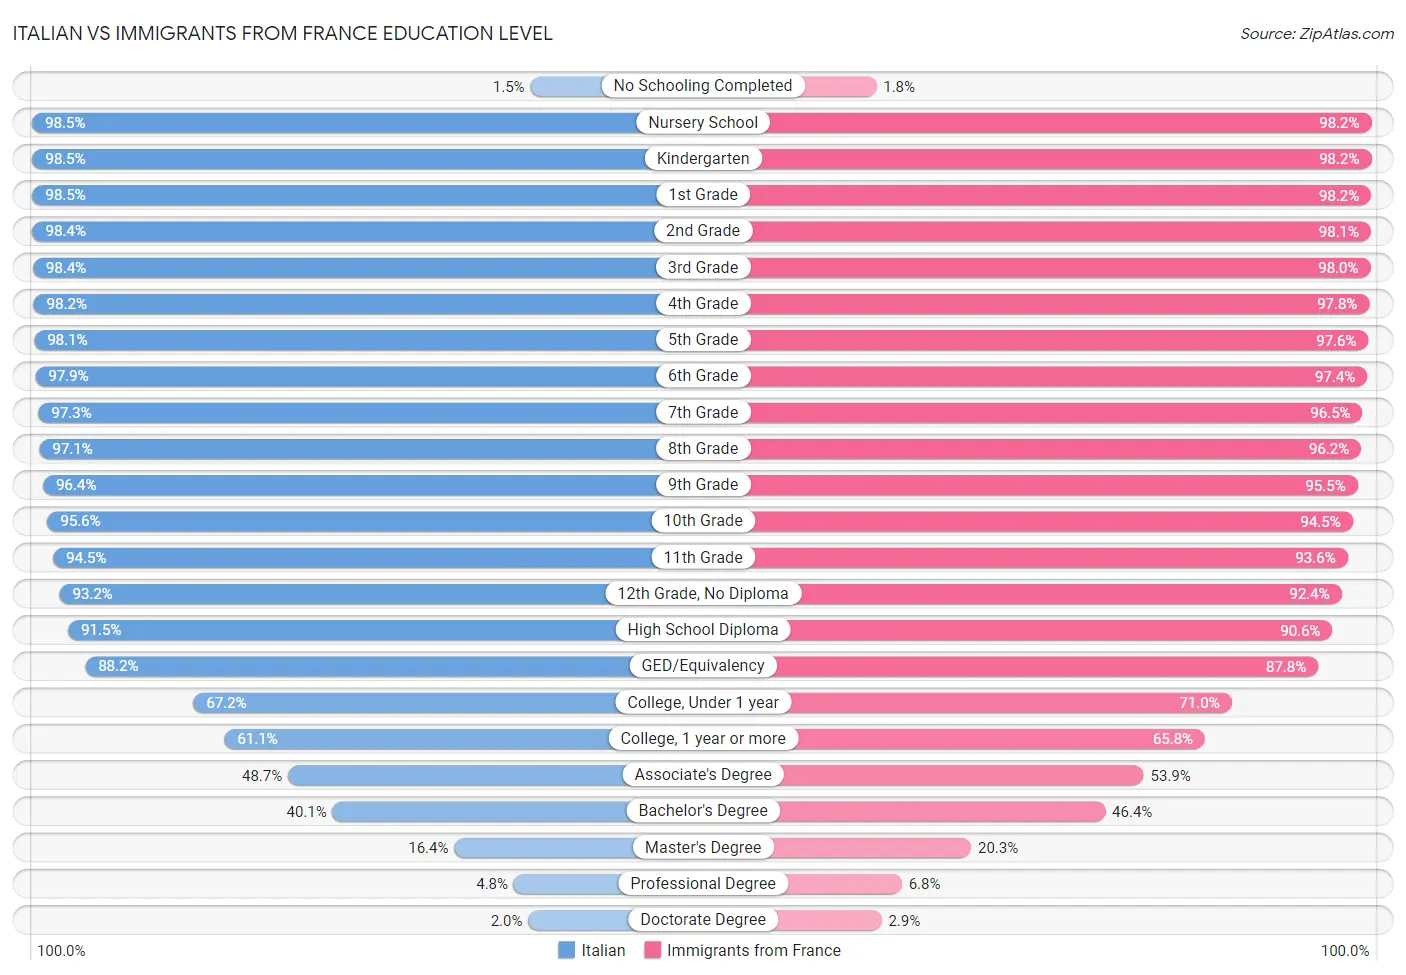 Italian vs Immigrants from France Education Level